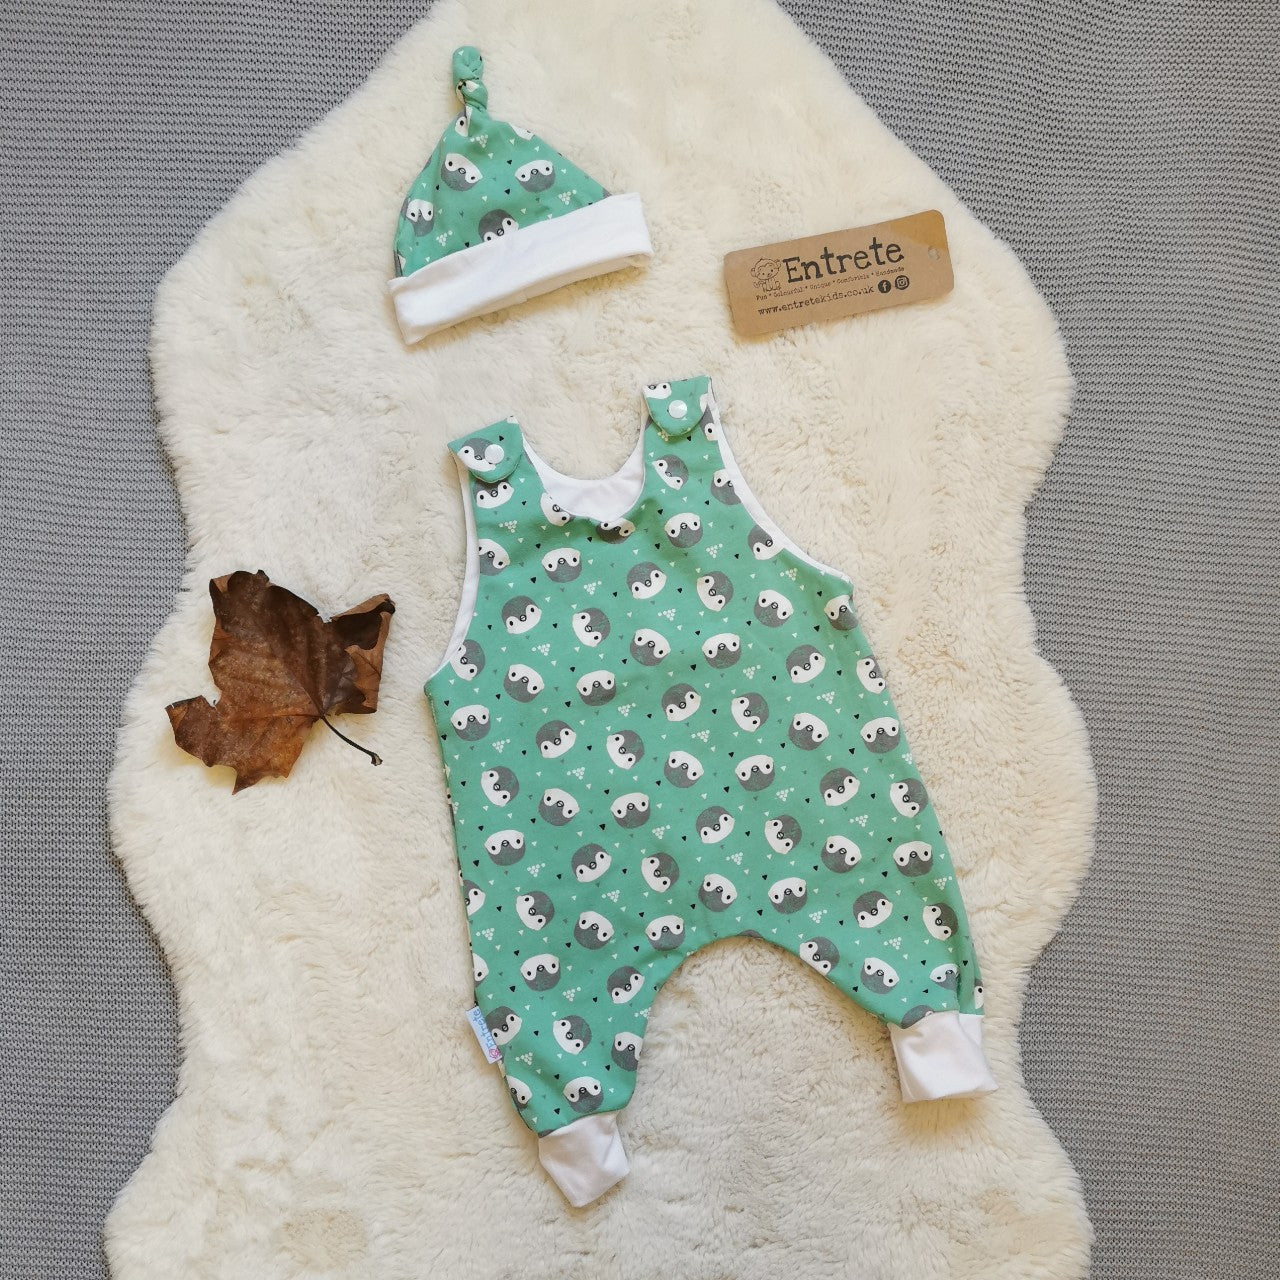 A romper gift set handmade using mint penguins organic cotton jersey.